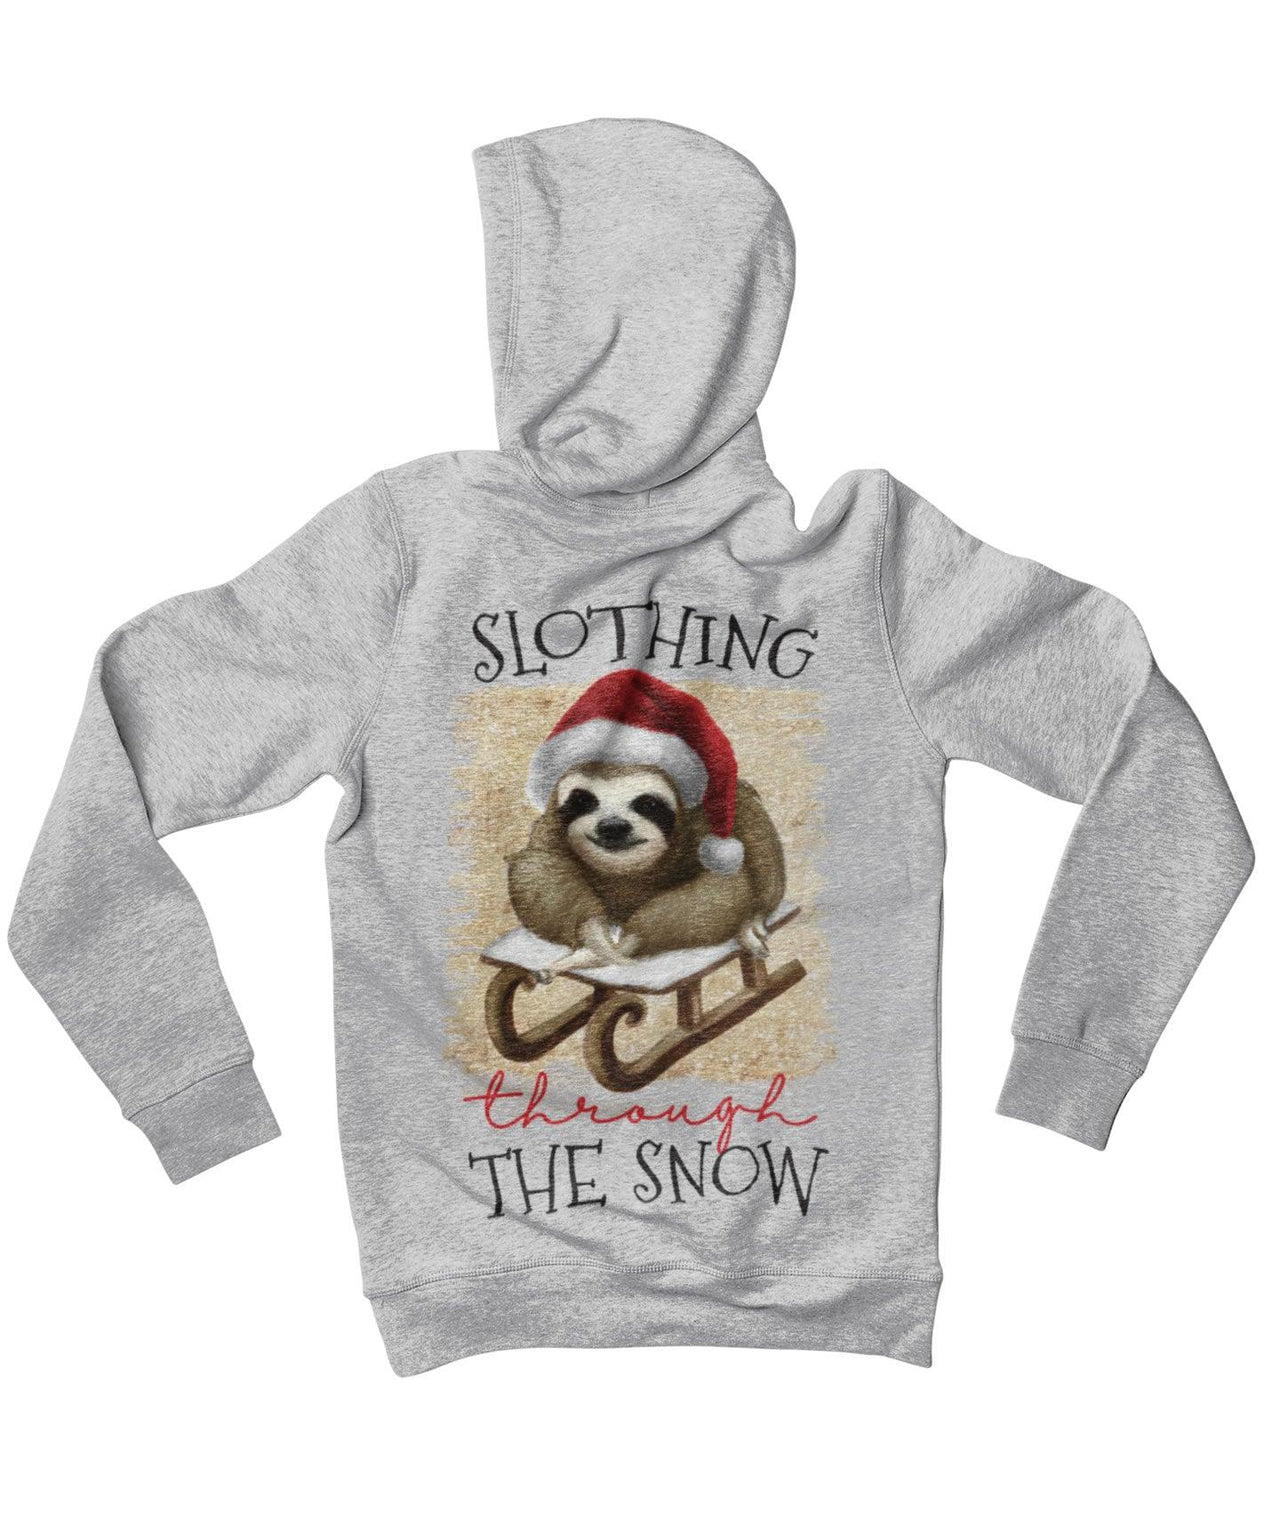 Slothing Through The Snow Christmas Back Printed Unisex Hoodie 8Ball